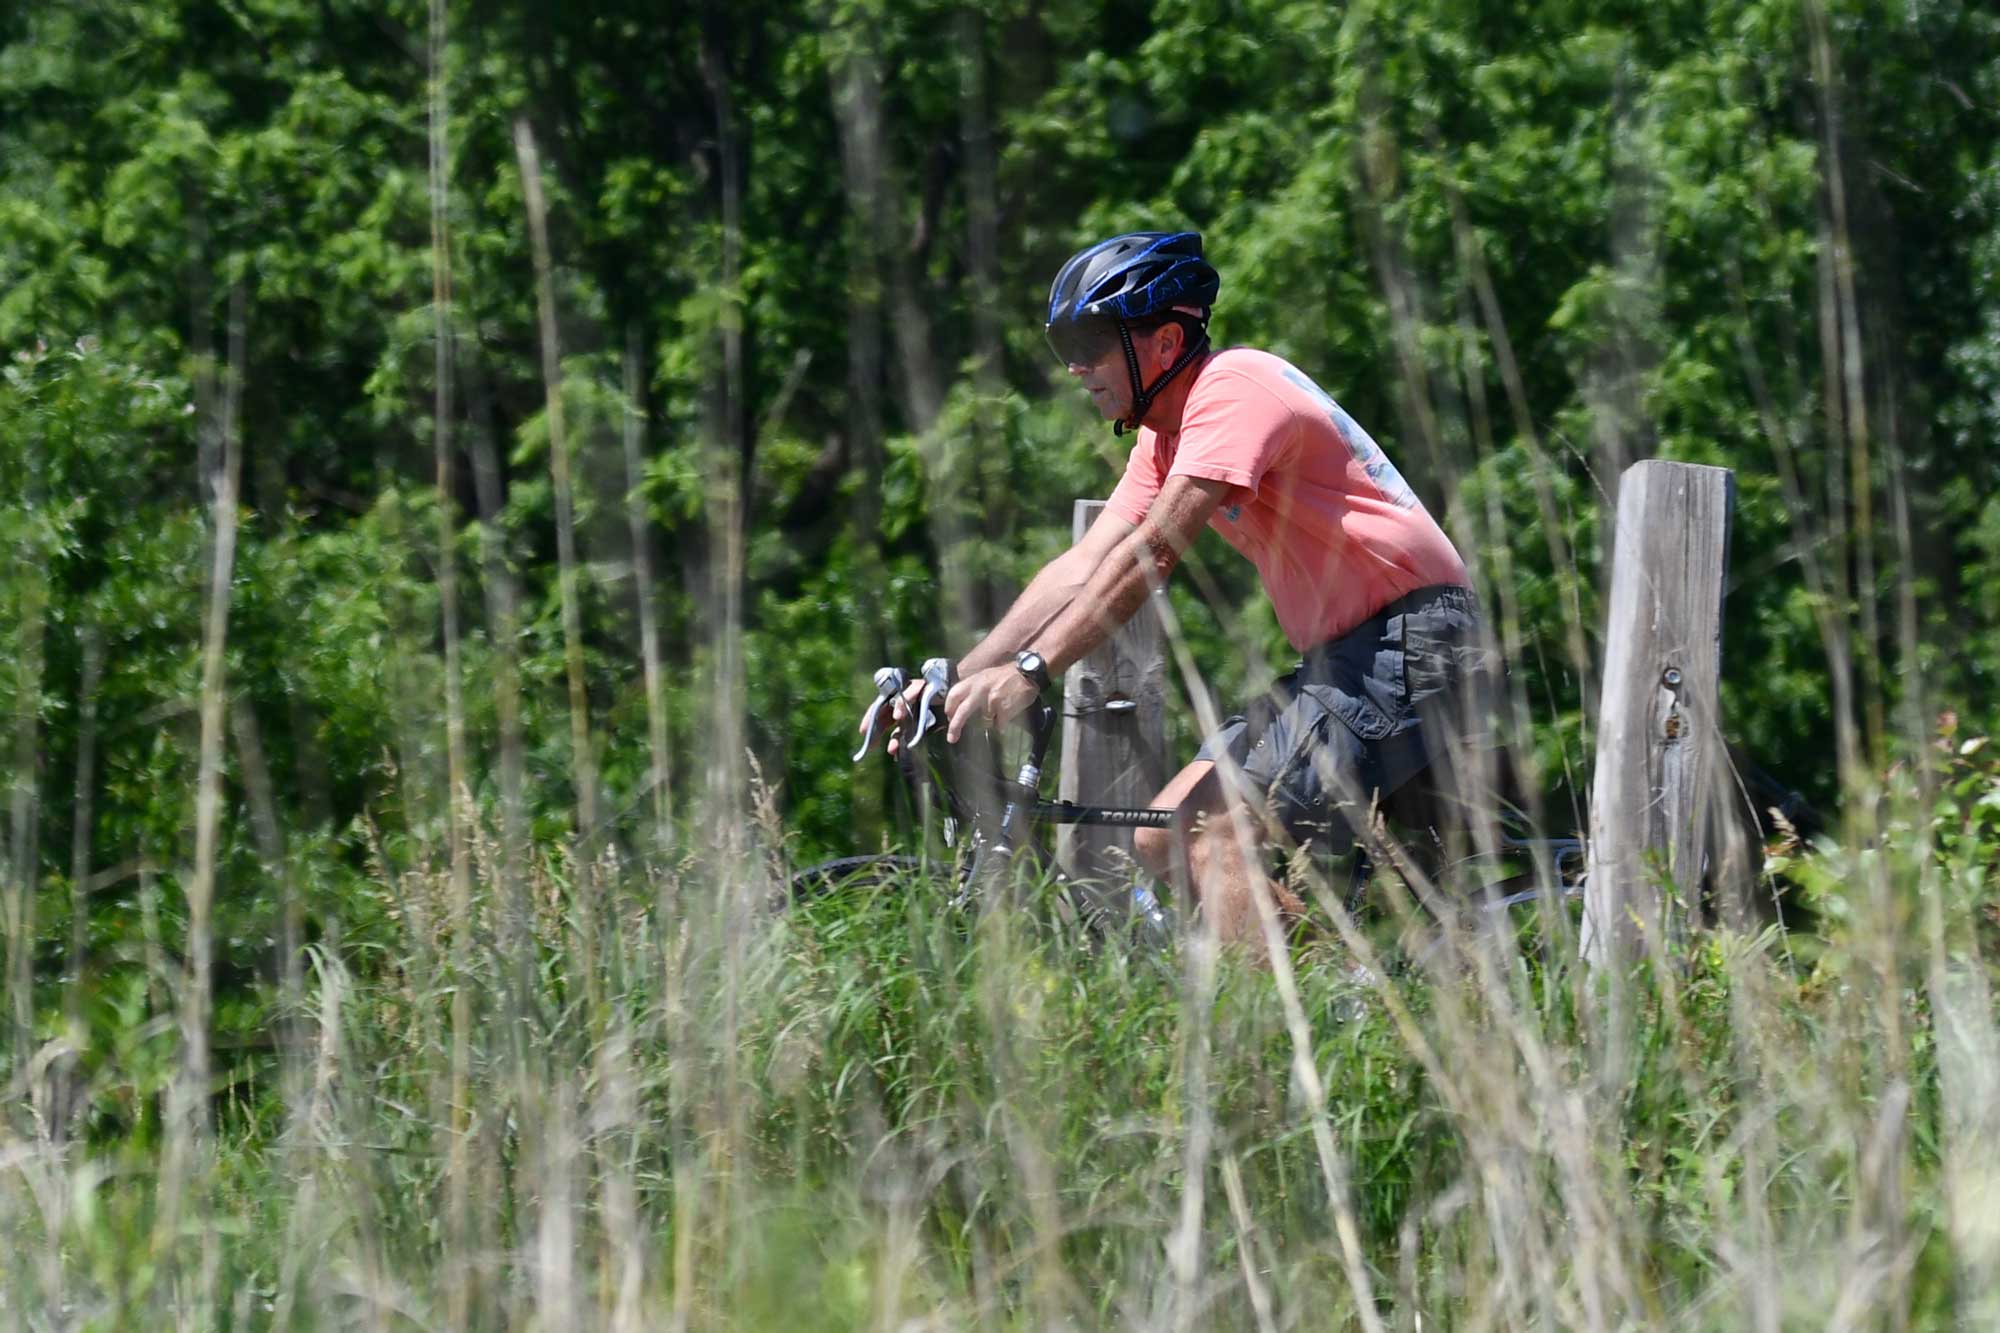 A man wearing a helmet rides his bike on a trail.